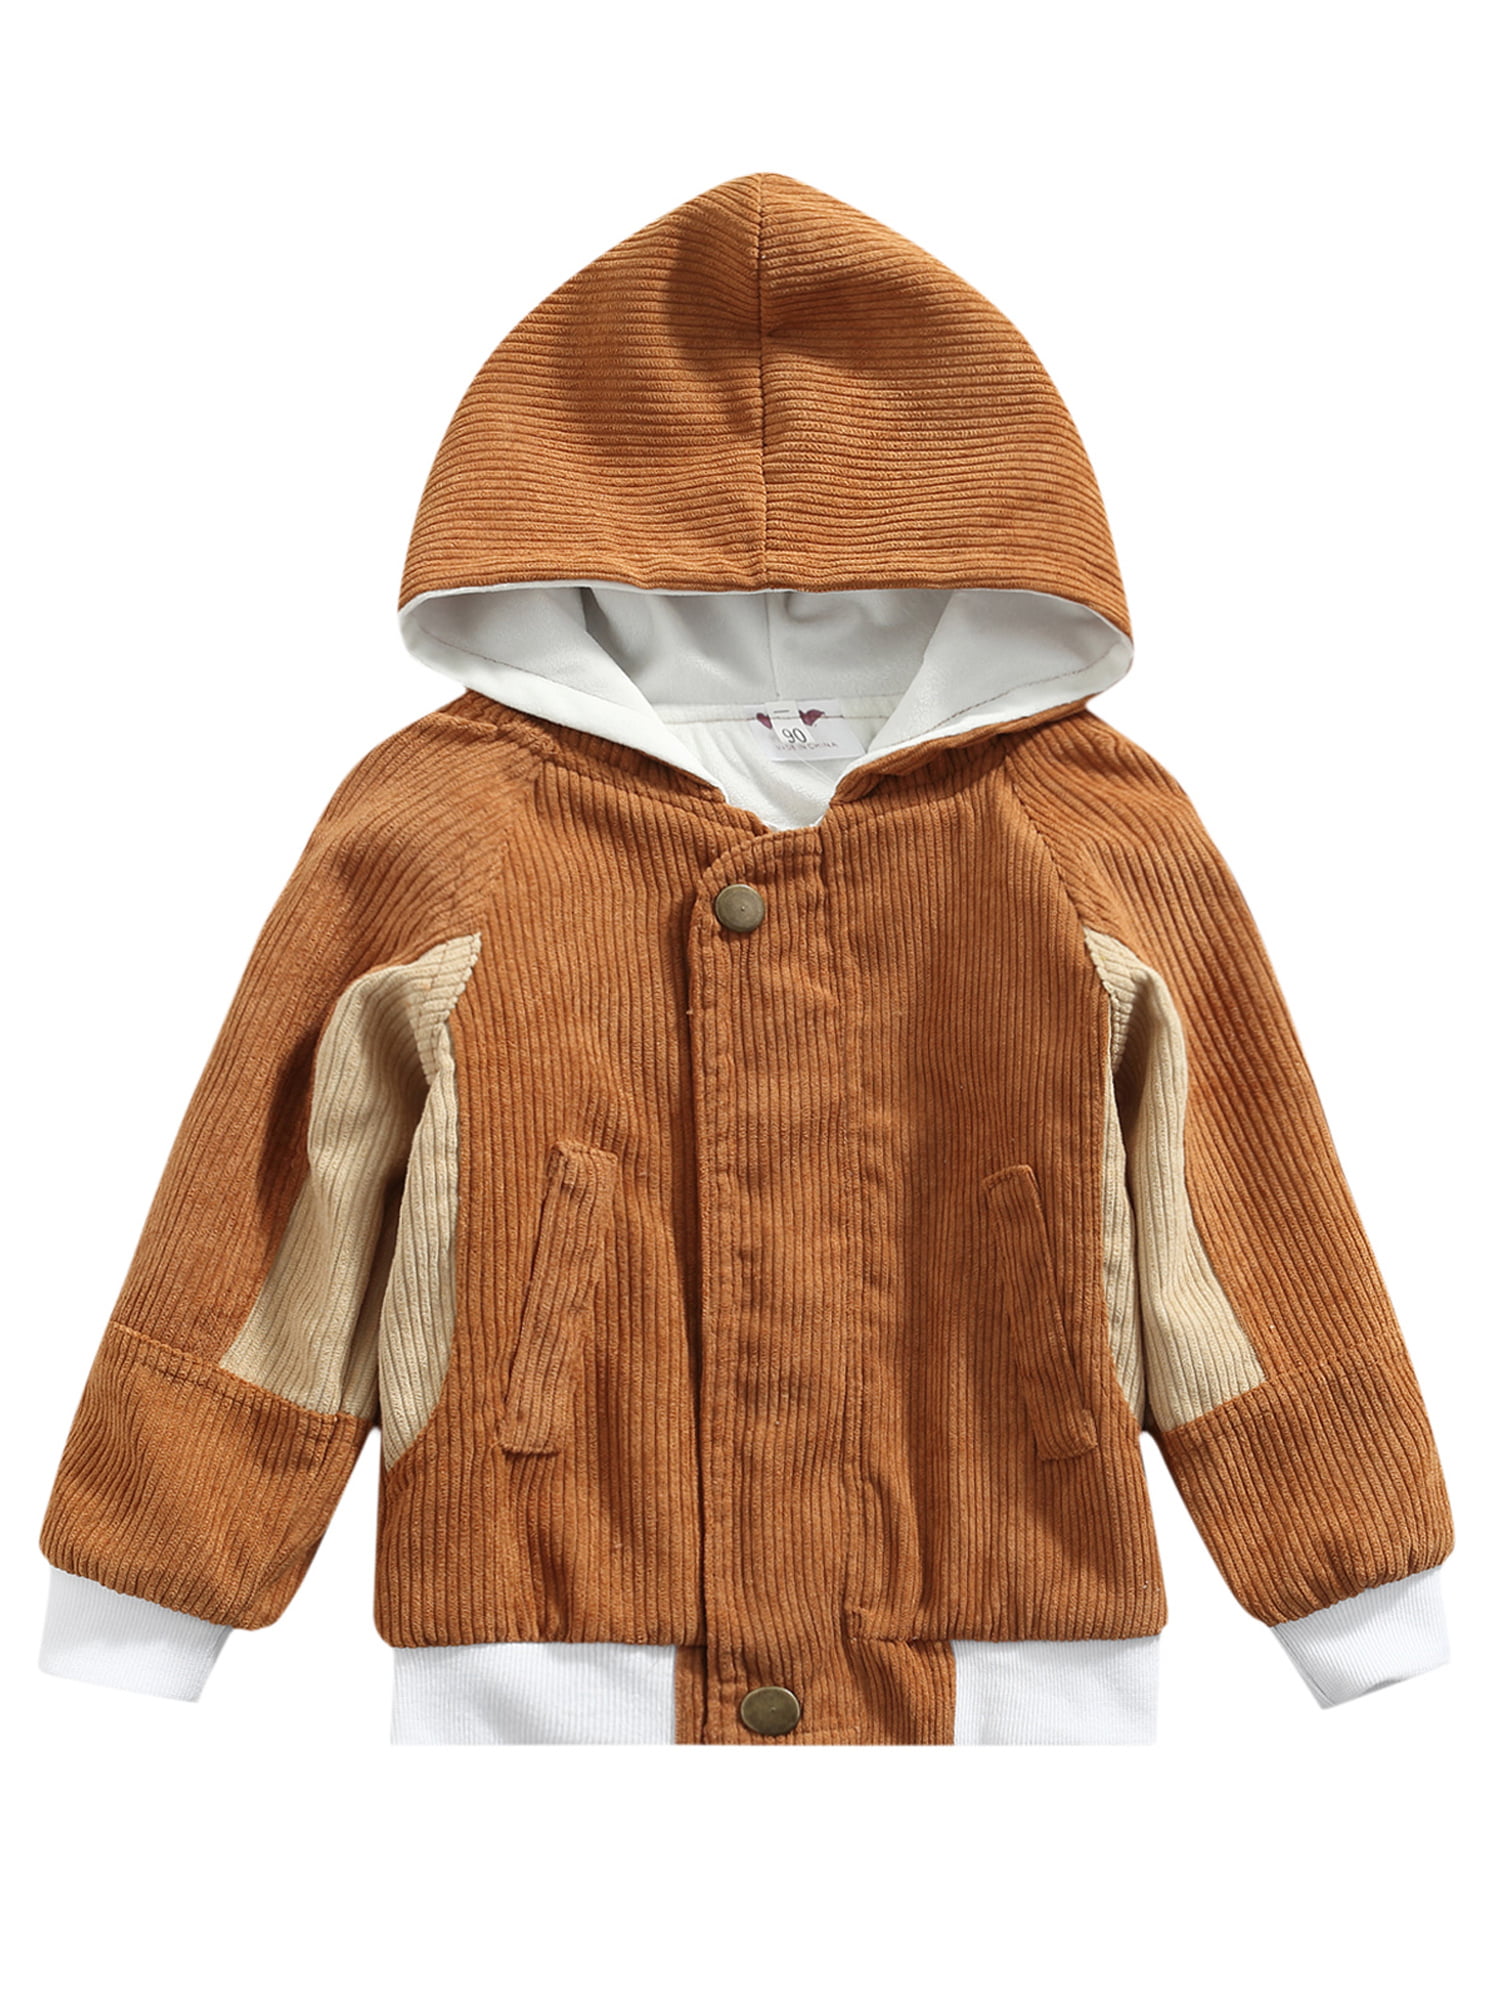 Kids Corduroy Jacket |fall Coat For Toddlers Baby fallCoat|lightweight jacket Kleding Unisex kinderkleding Jacks & Jassen Fall Outfit For Boys and Girls Unisex Kids Jacket 